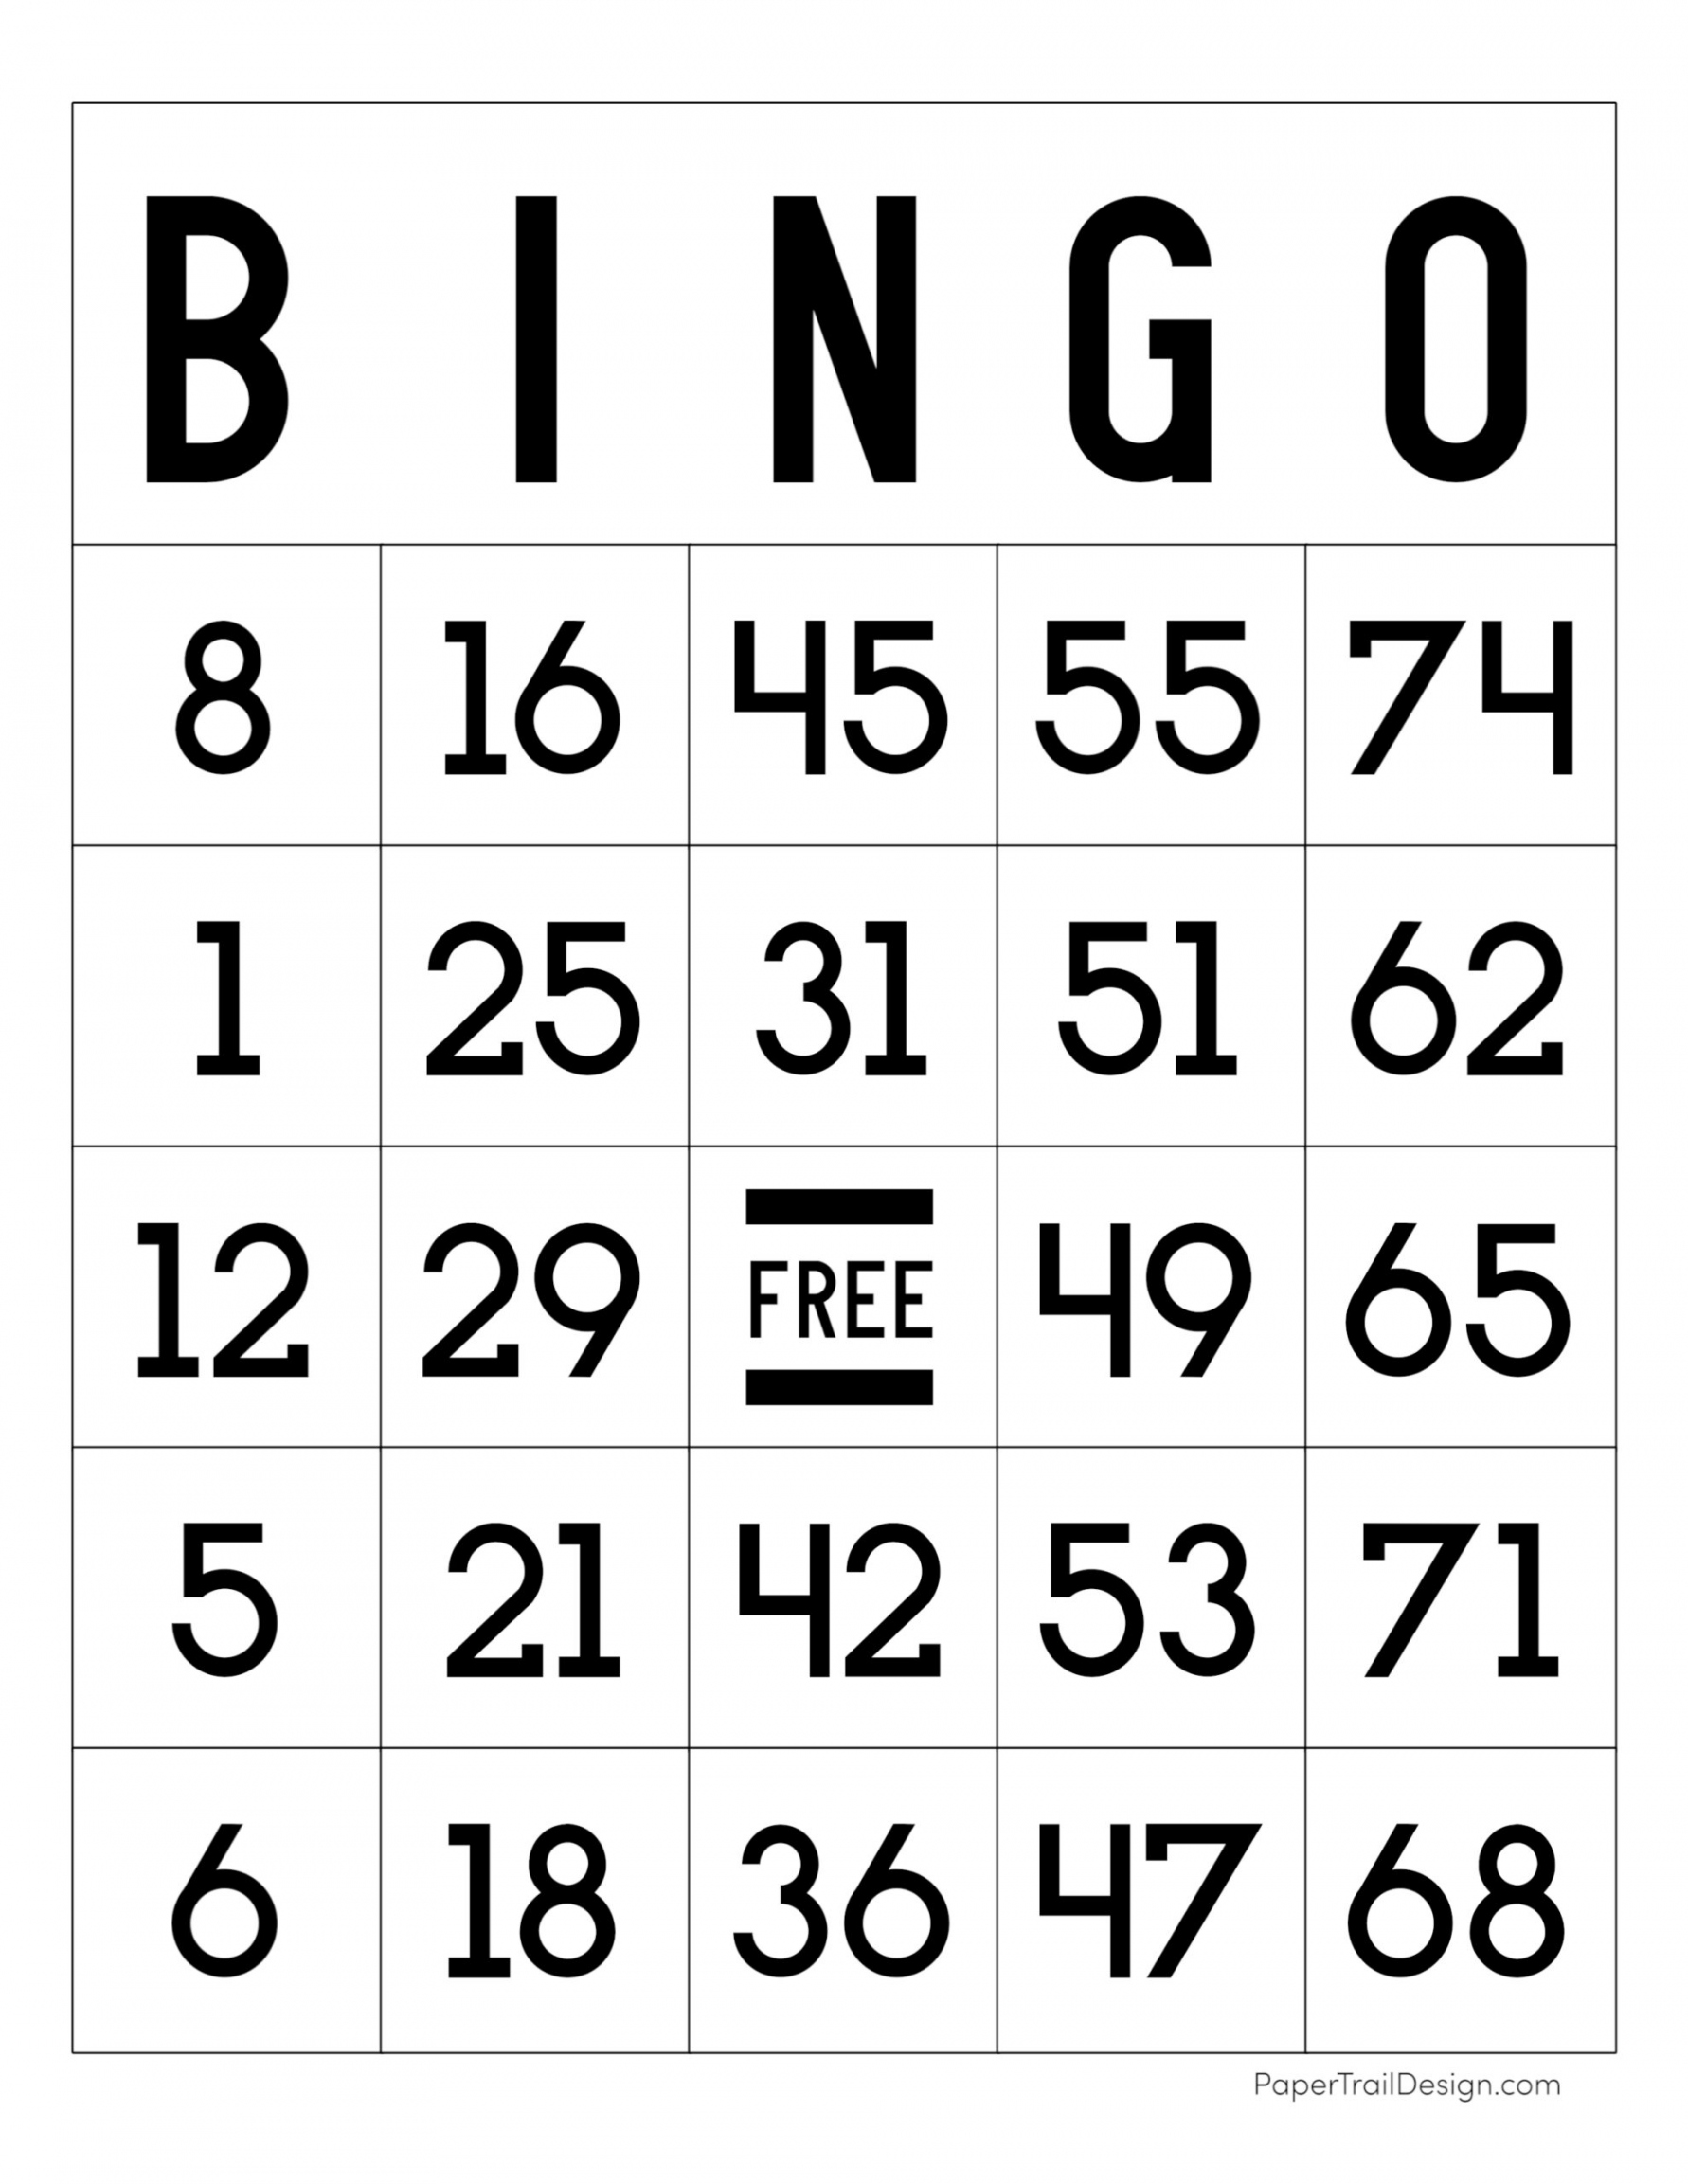 Free Bingo Card Generator Printable - Printable - Free Printable Bingo Cards - Paper Trail Design